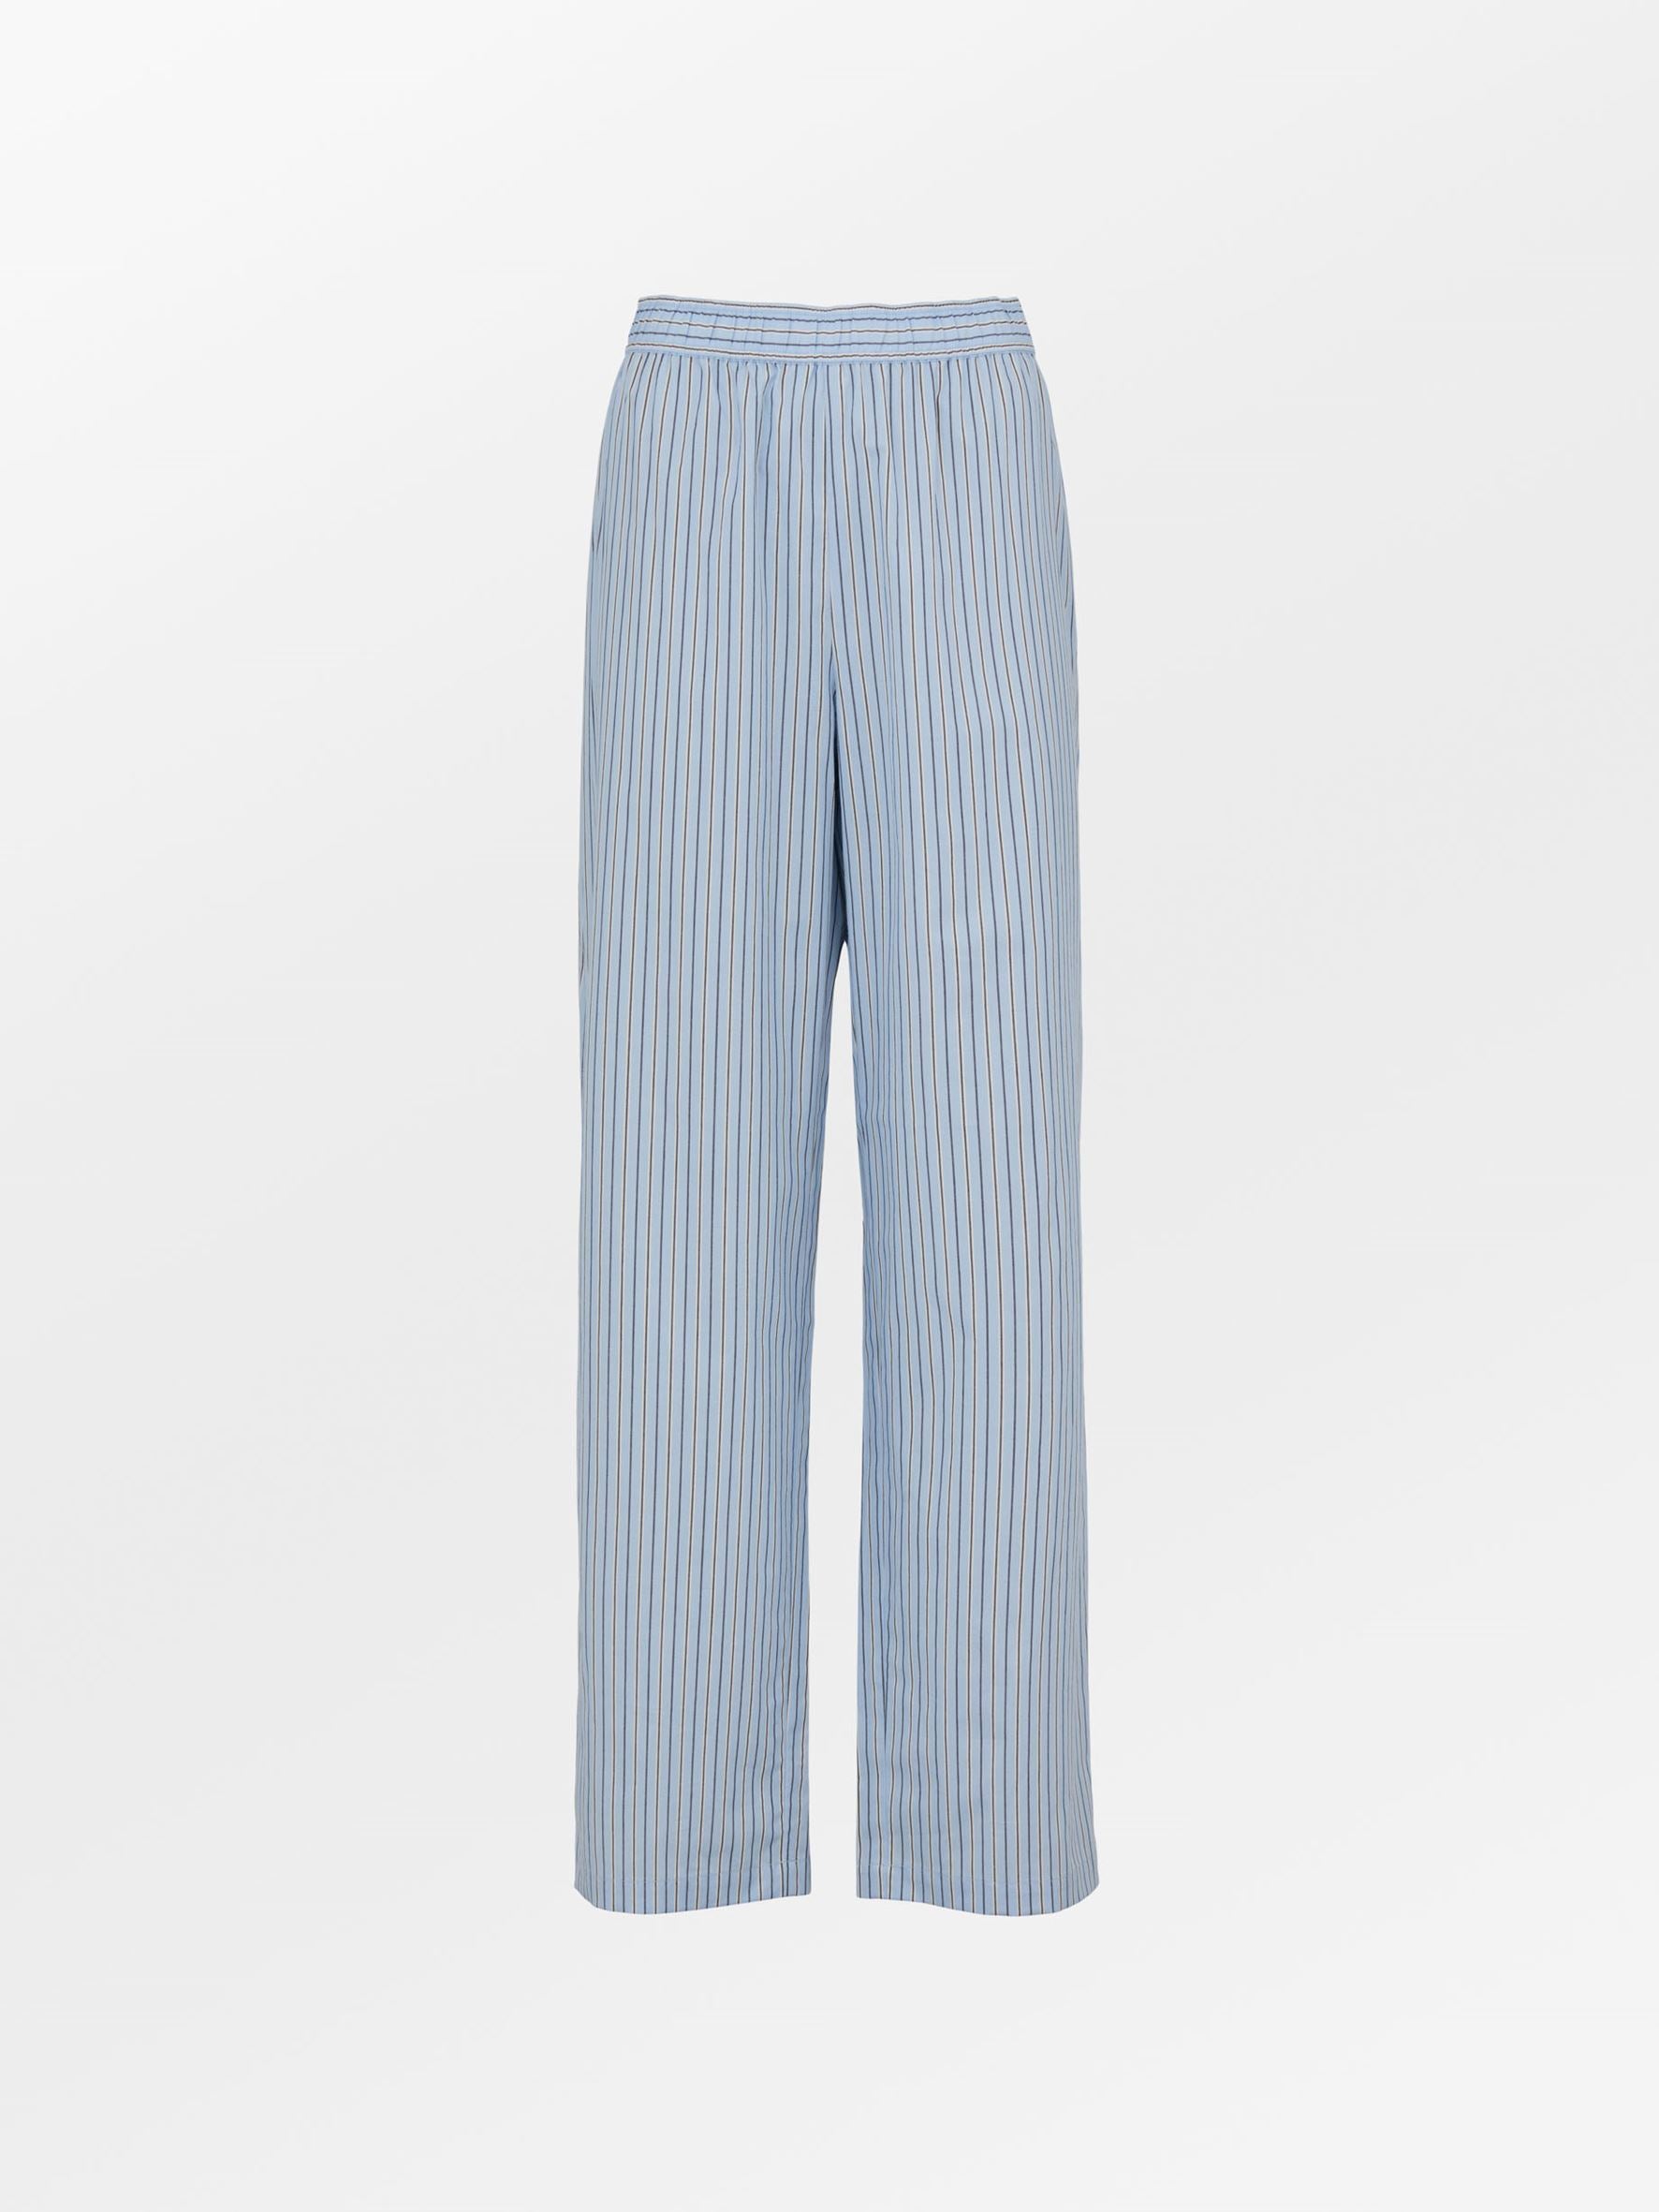 Stripel Pyjamas Set - Blue Sky Clothing   - Becksöndergaard